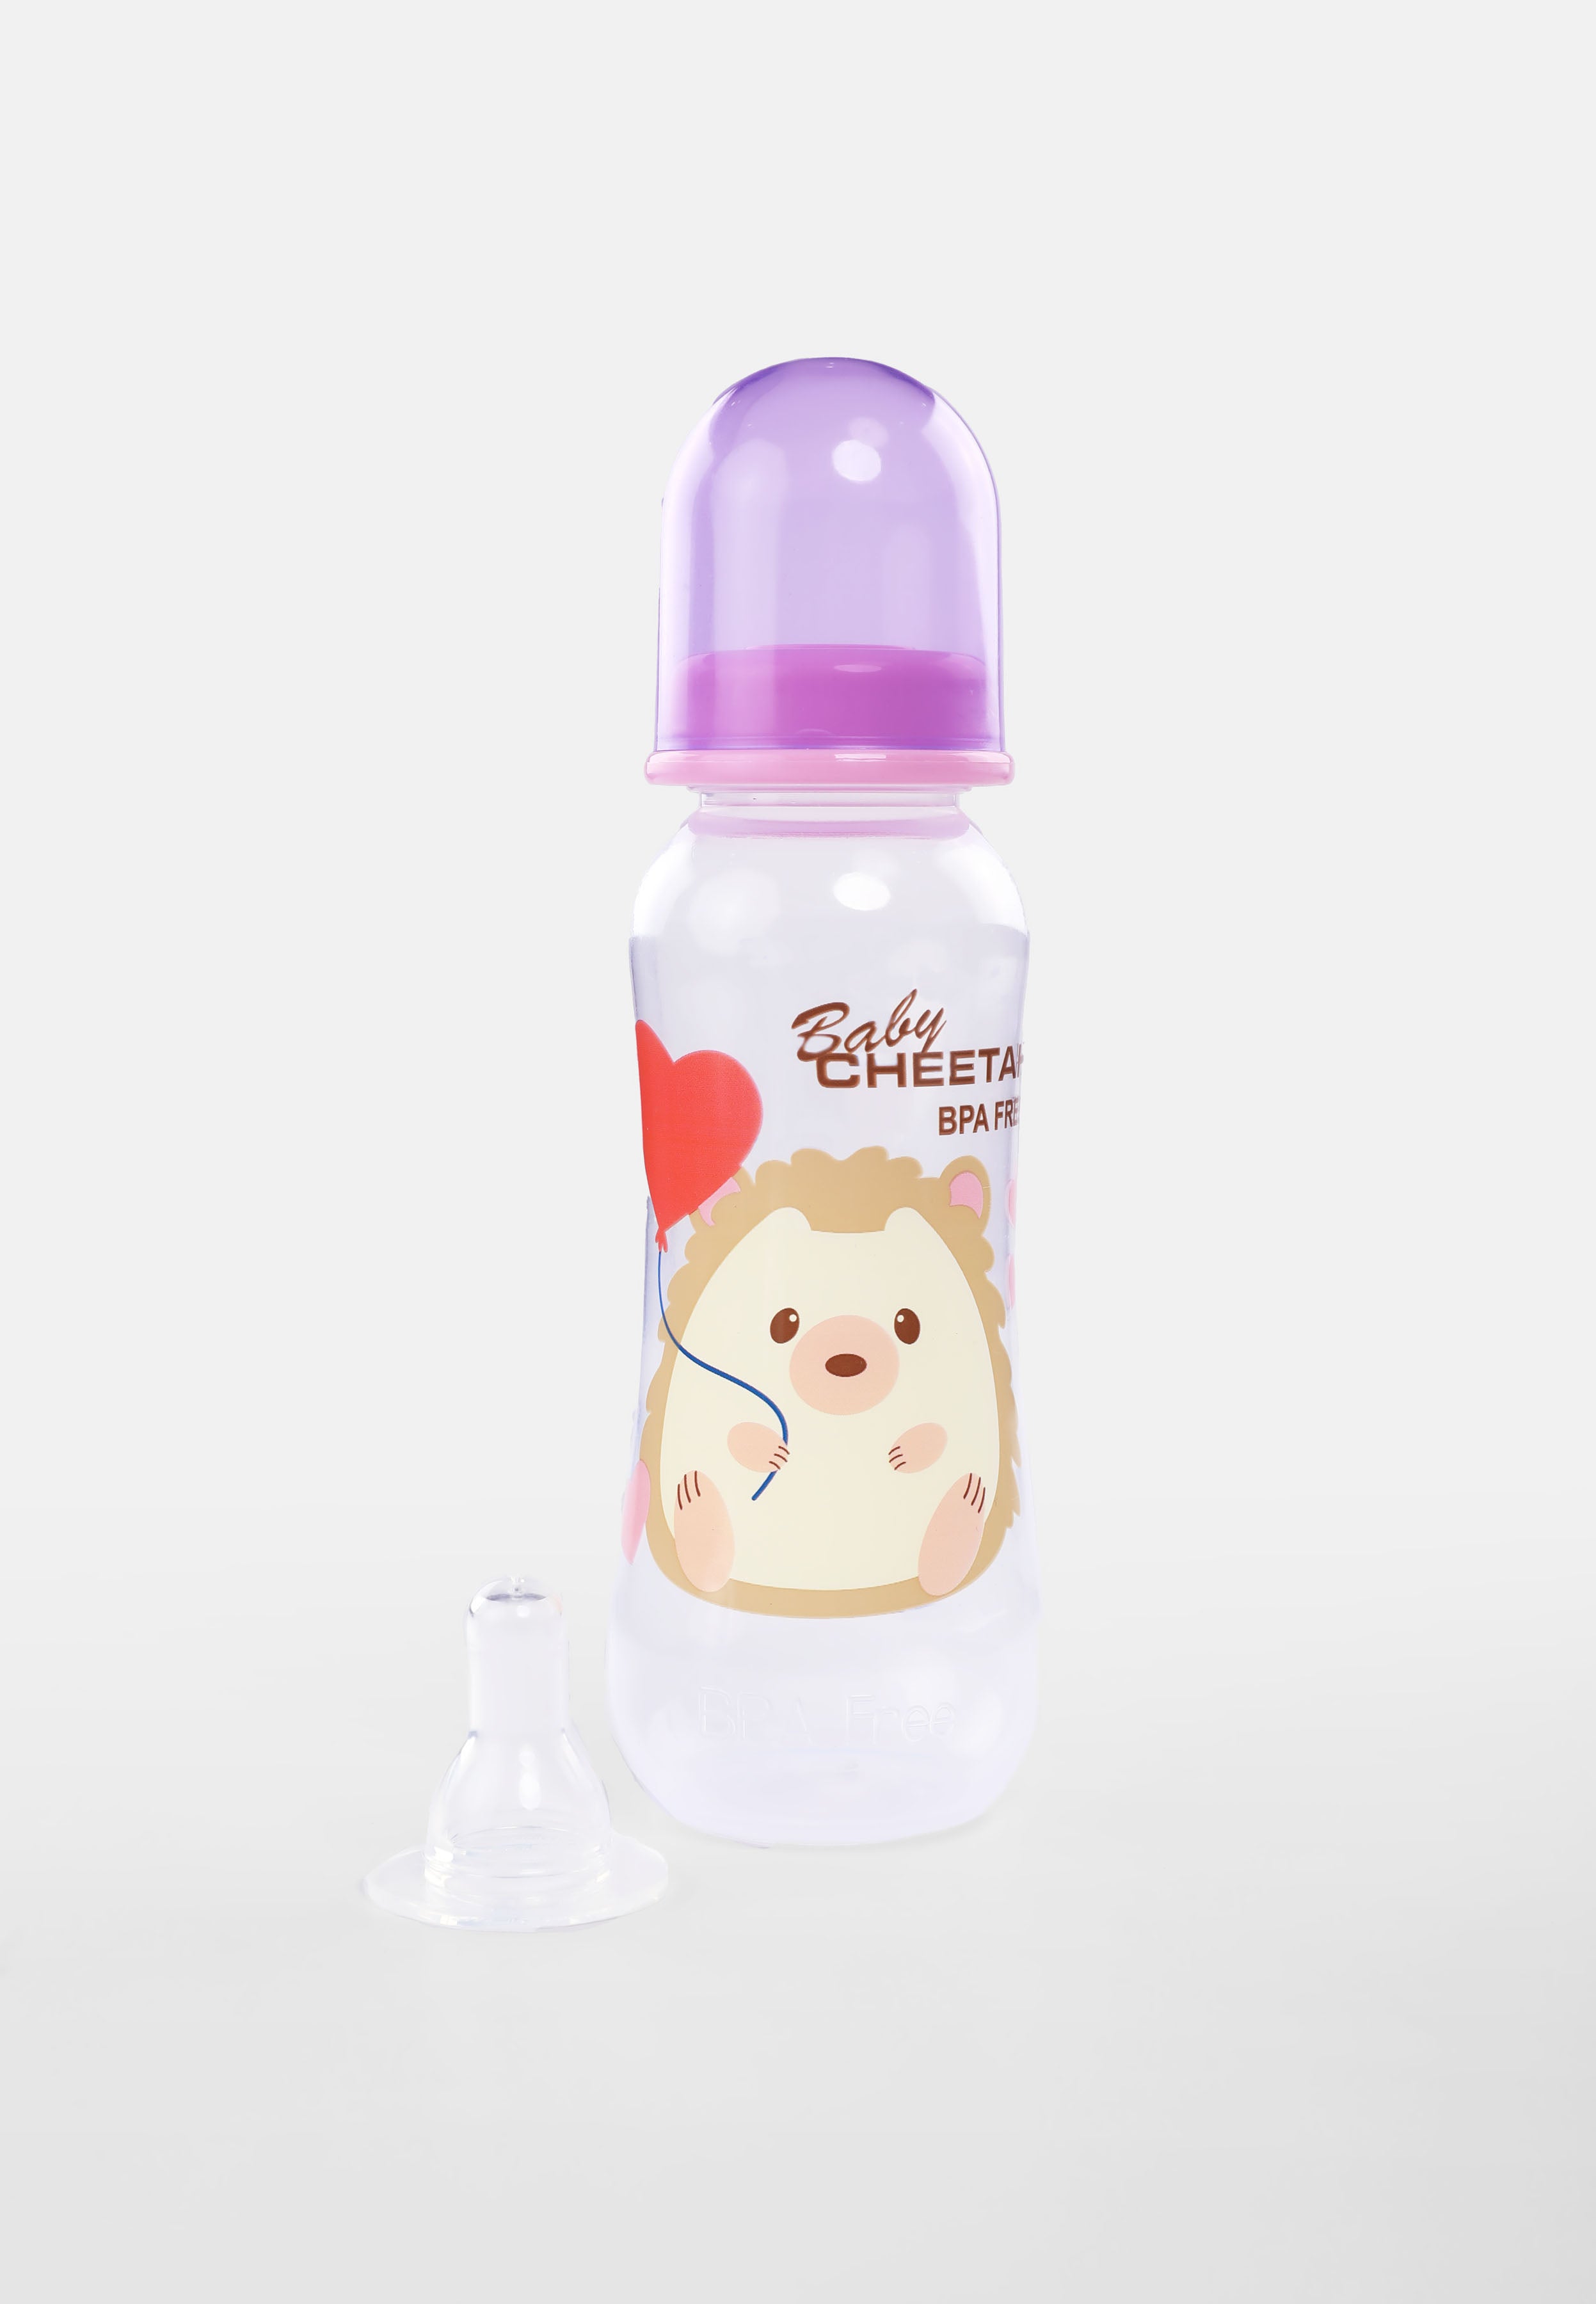 Baby Cheetah 3 in 1 Feeding Bottle - CBB-FB22010